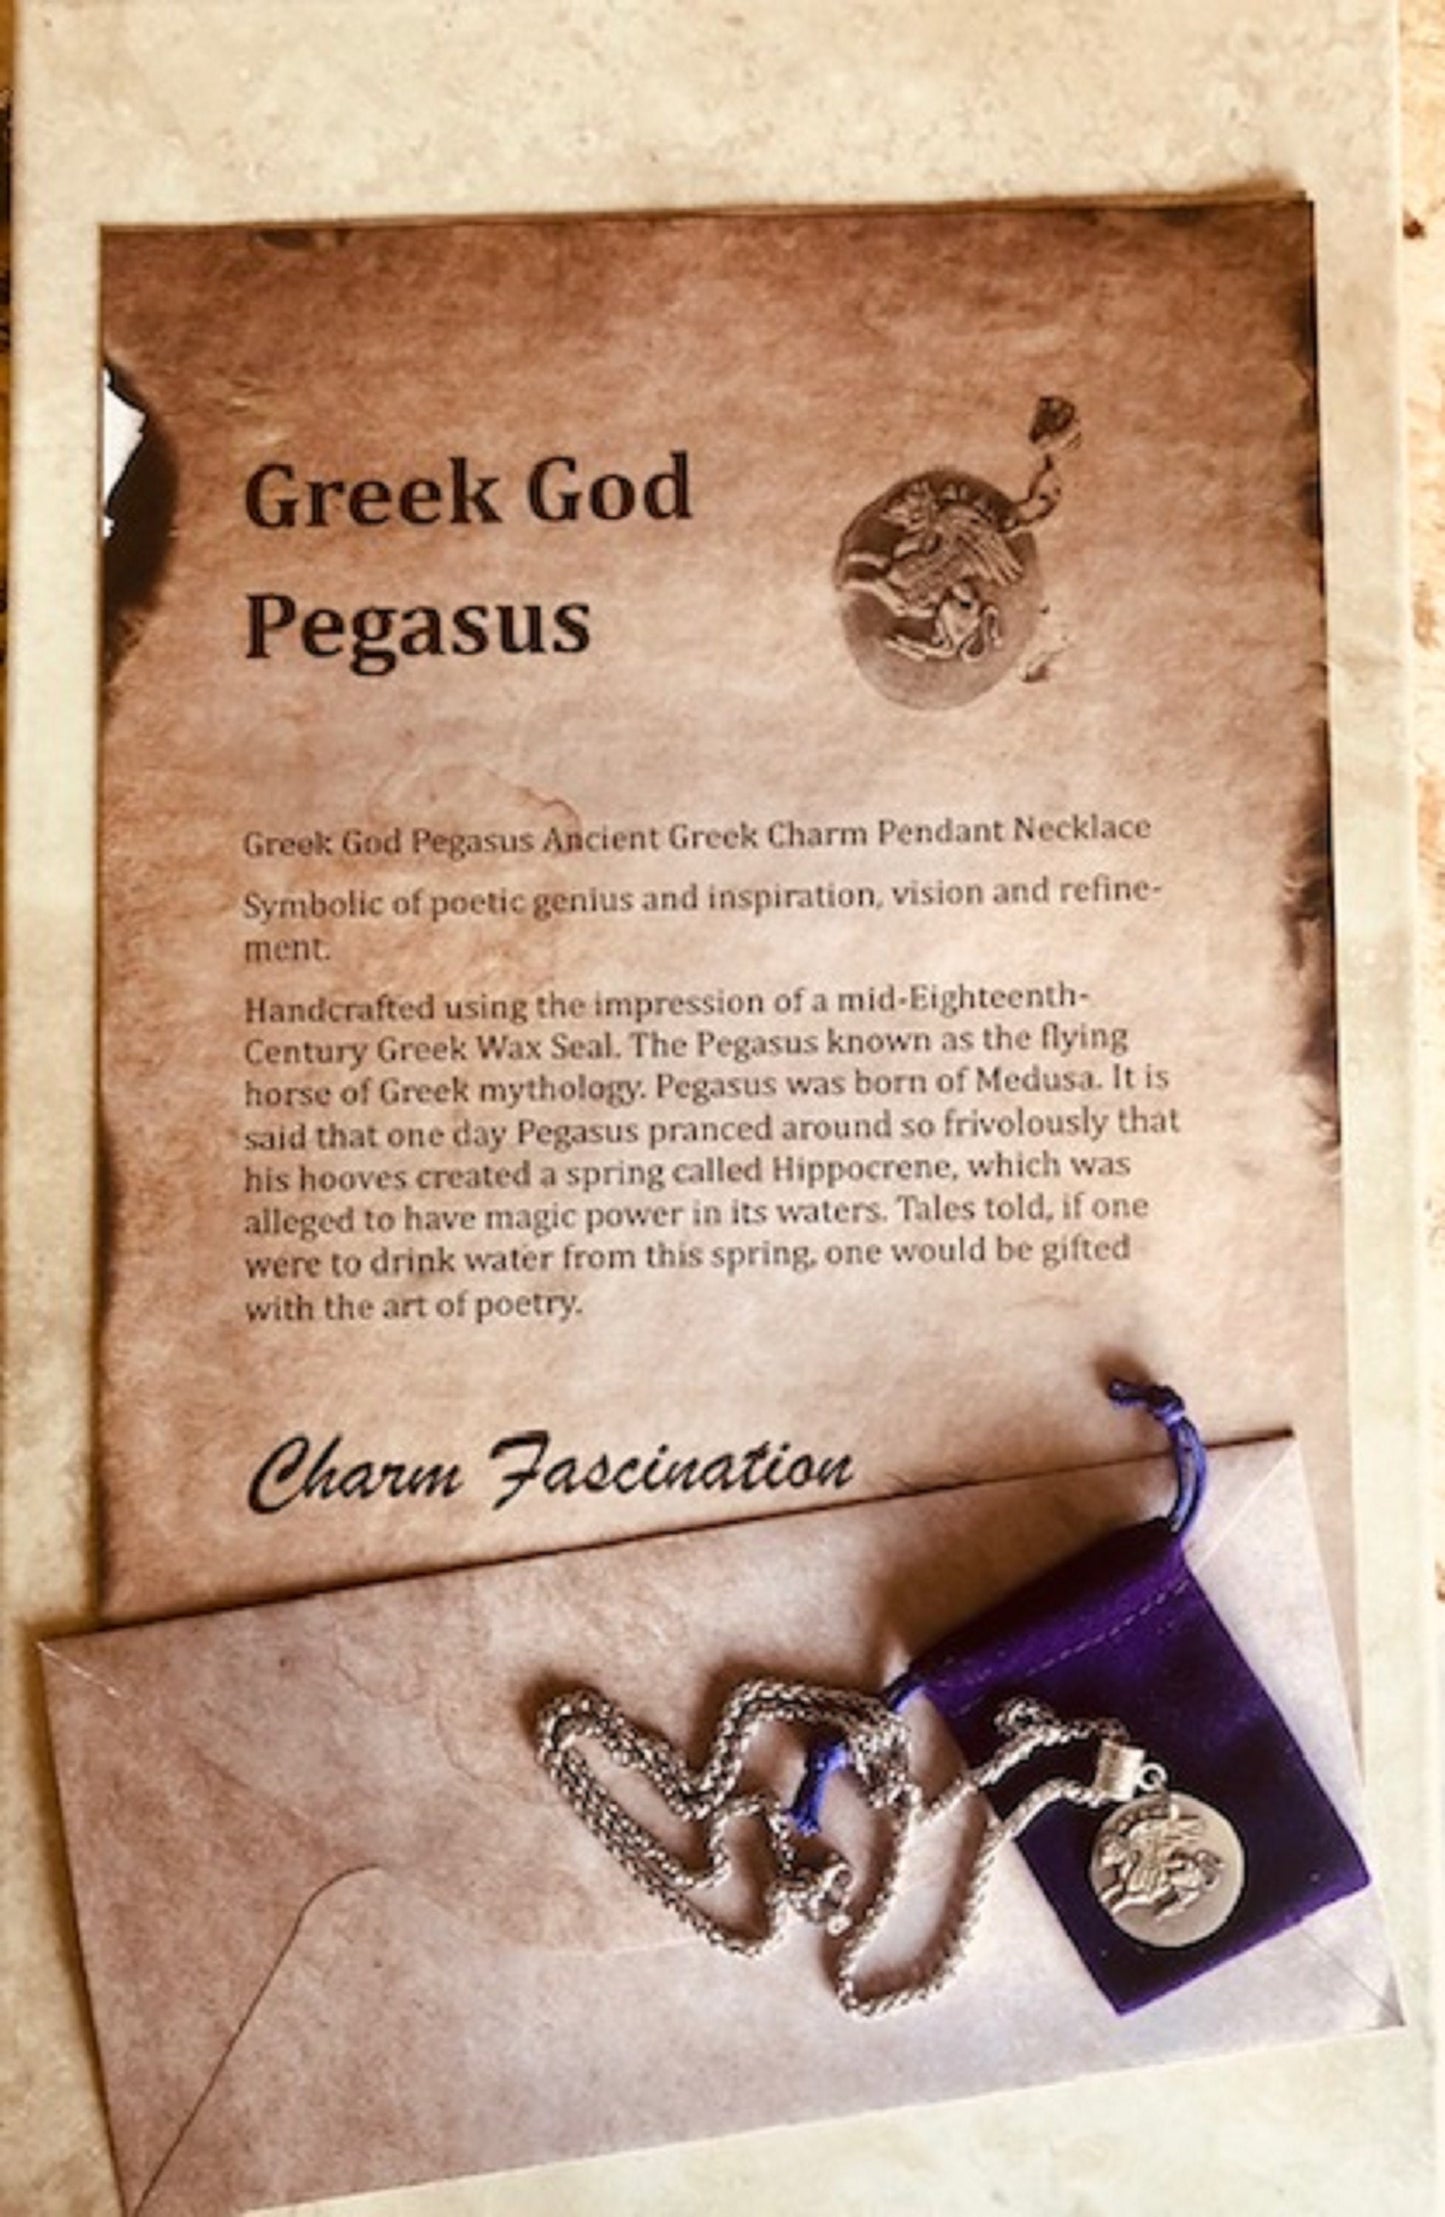 Greek God Pegasus Ancient Greek Charm Pendant Necklace Mid-Eighteenth-Century Wax Seal Poetry Vision Refinement Handmade